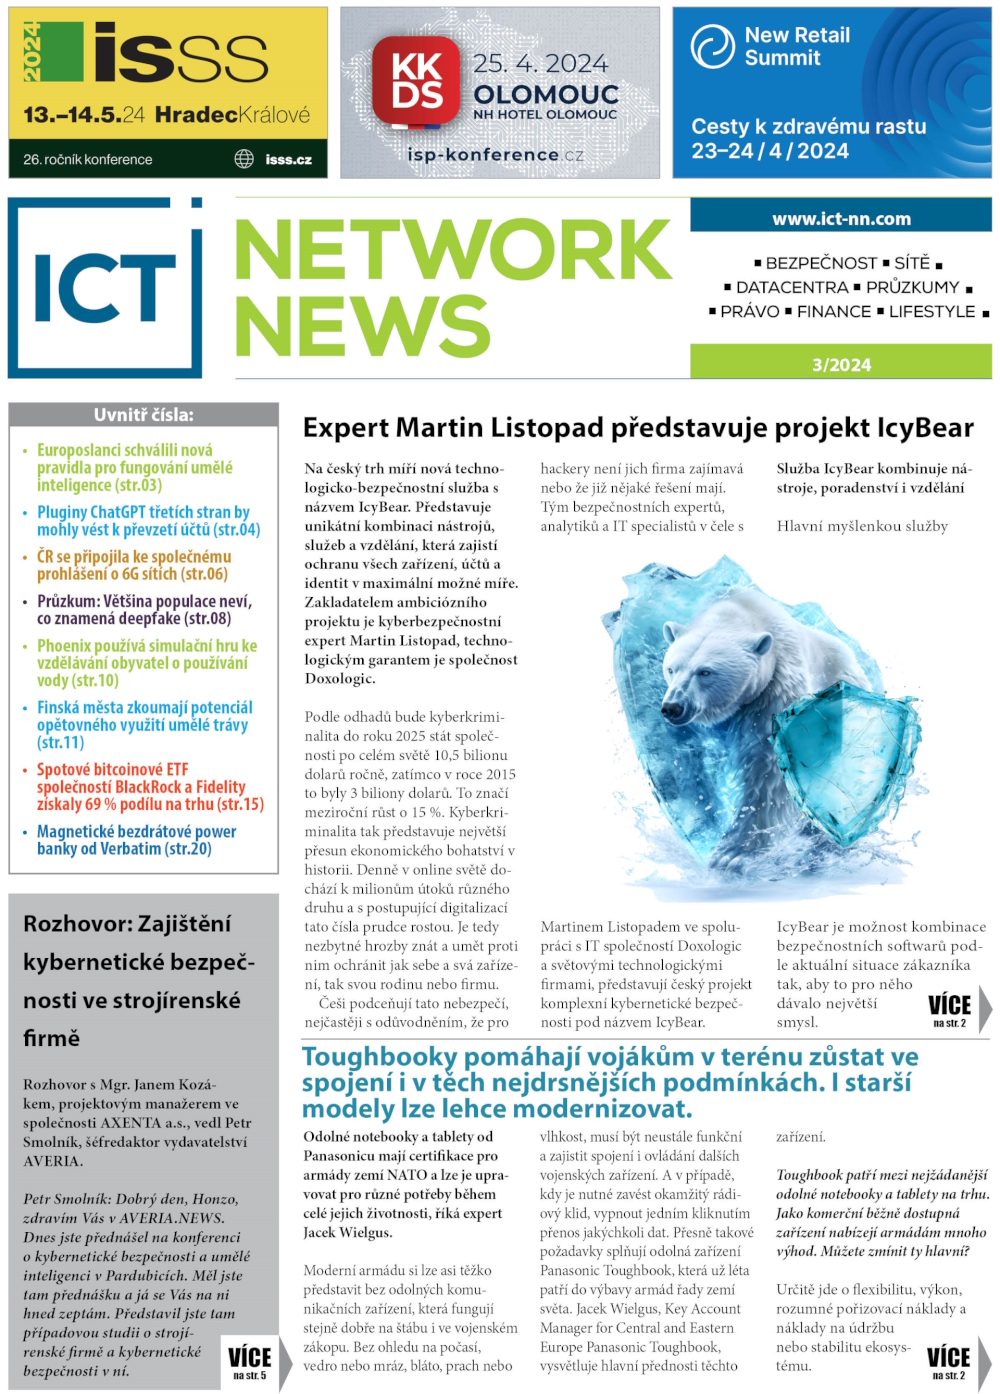 ICT NETWORK NEWS 3-2024